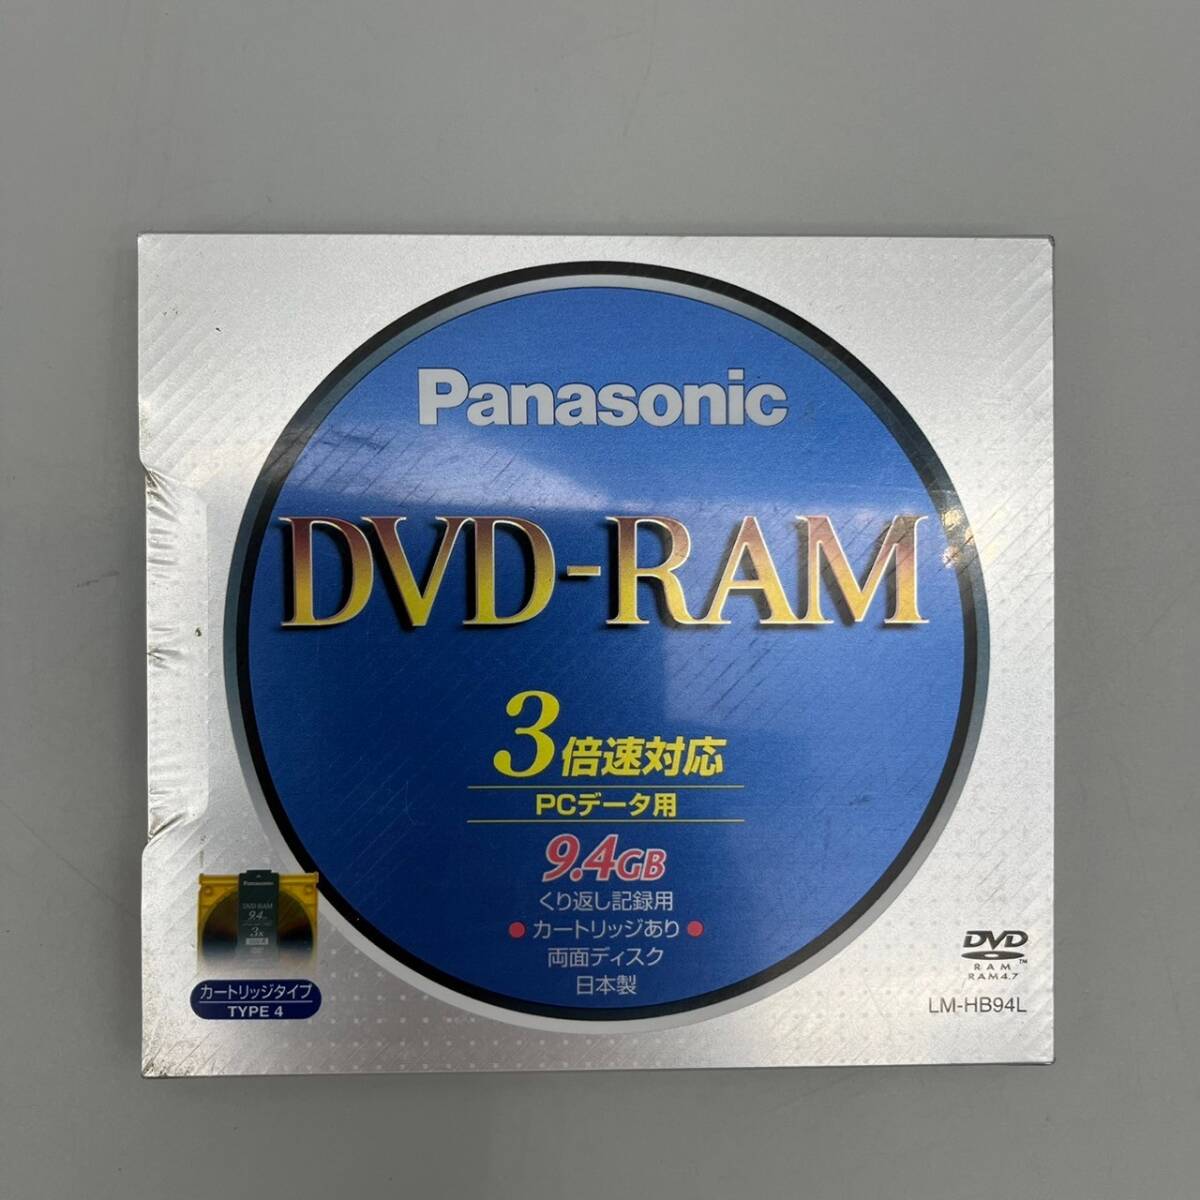 Panasonic パナソニック DVD-RAM LM-HB94L PCデータ用 3倍速対応 両面ディスク 9.4GB 管:050503の画像1